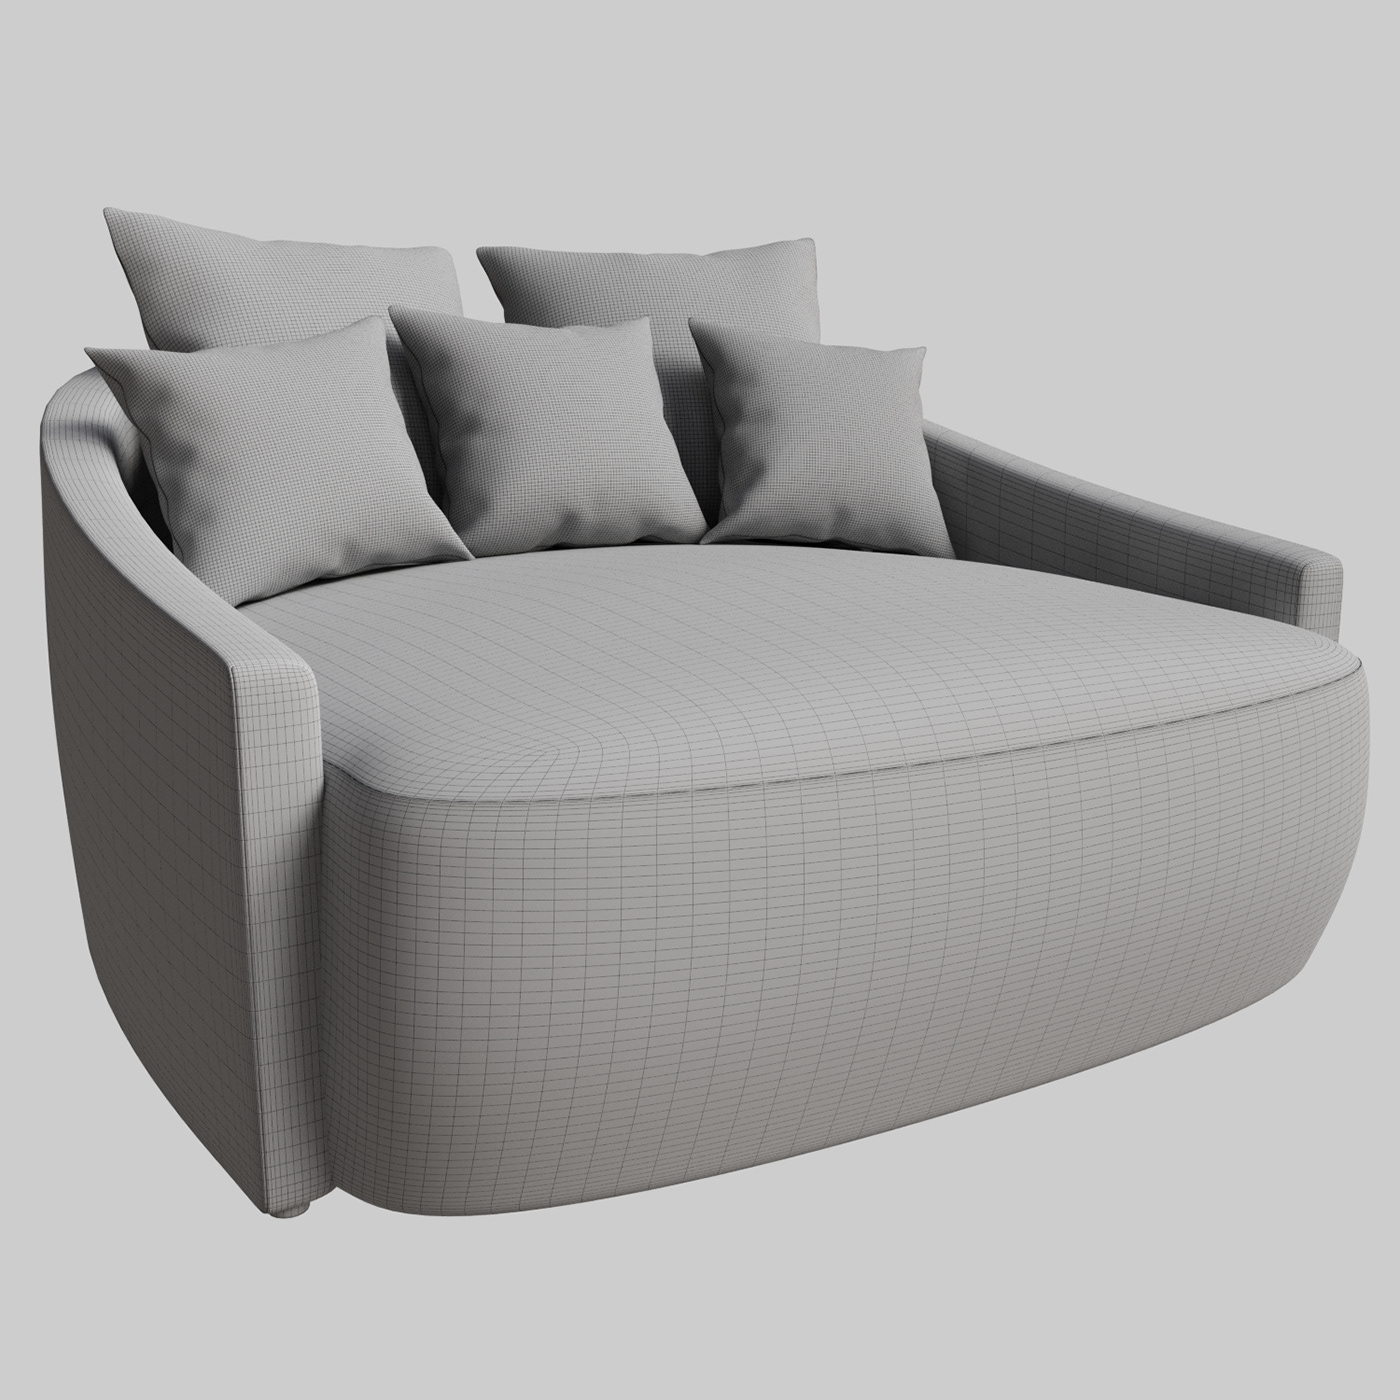 3d modeling visualization armchair design Interior 3ds max modern 3dmodel